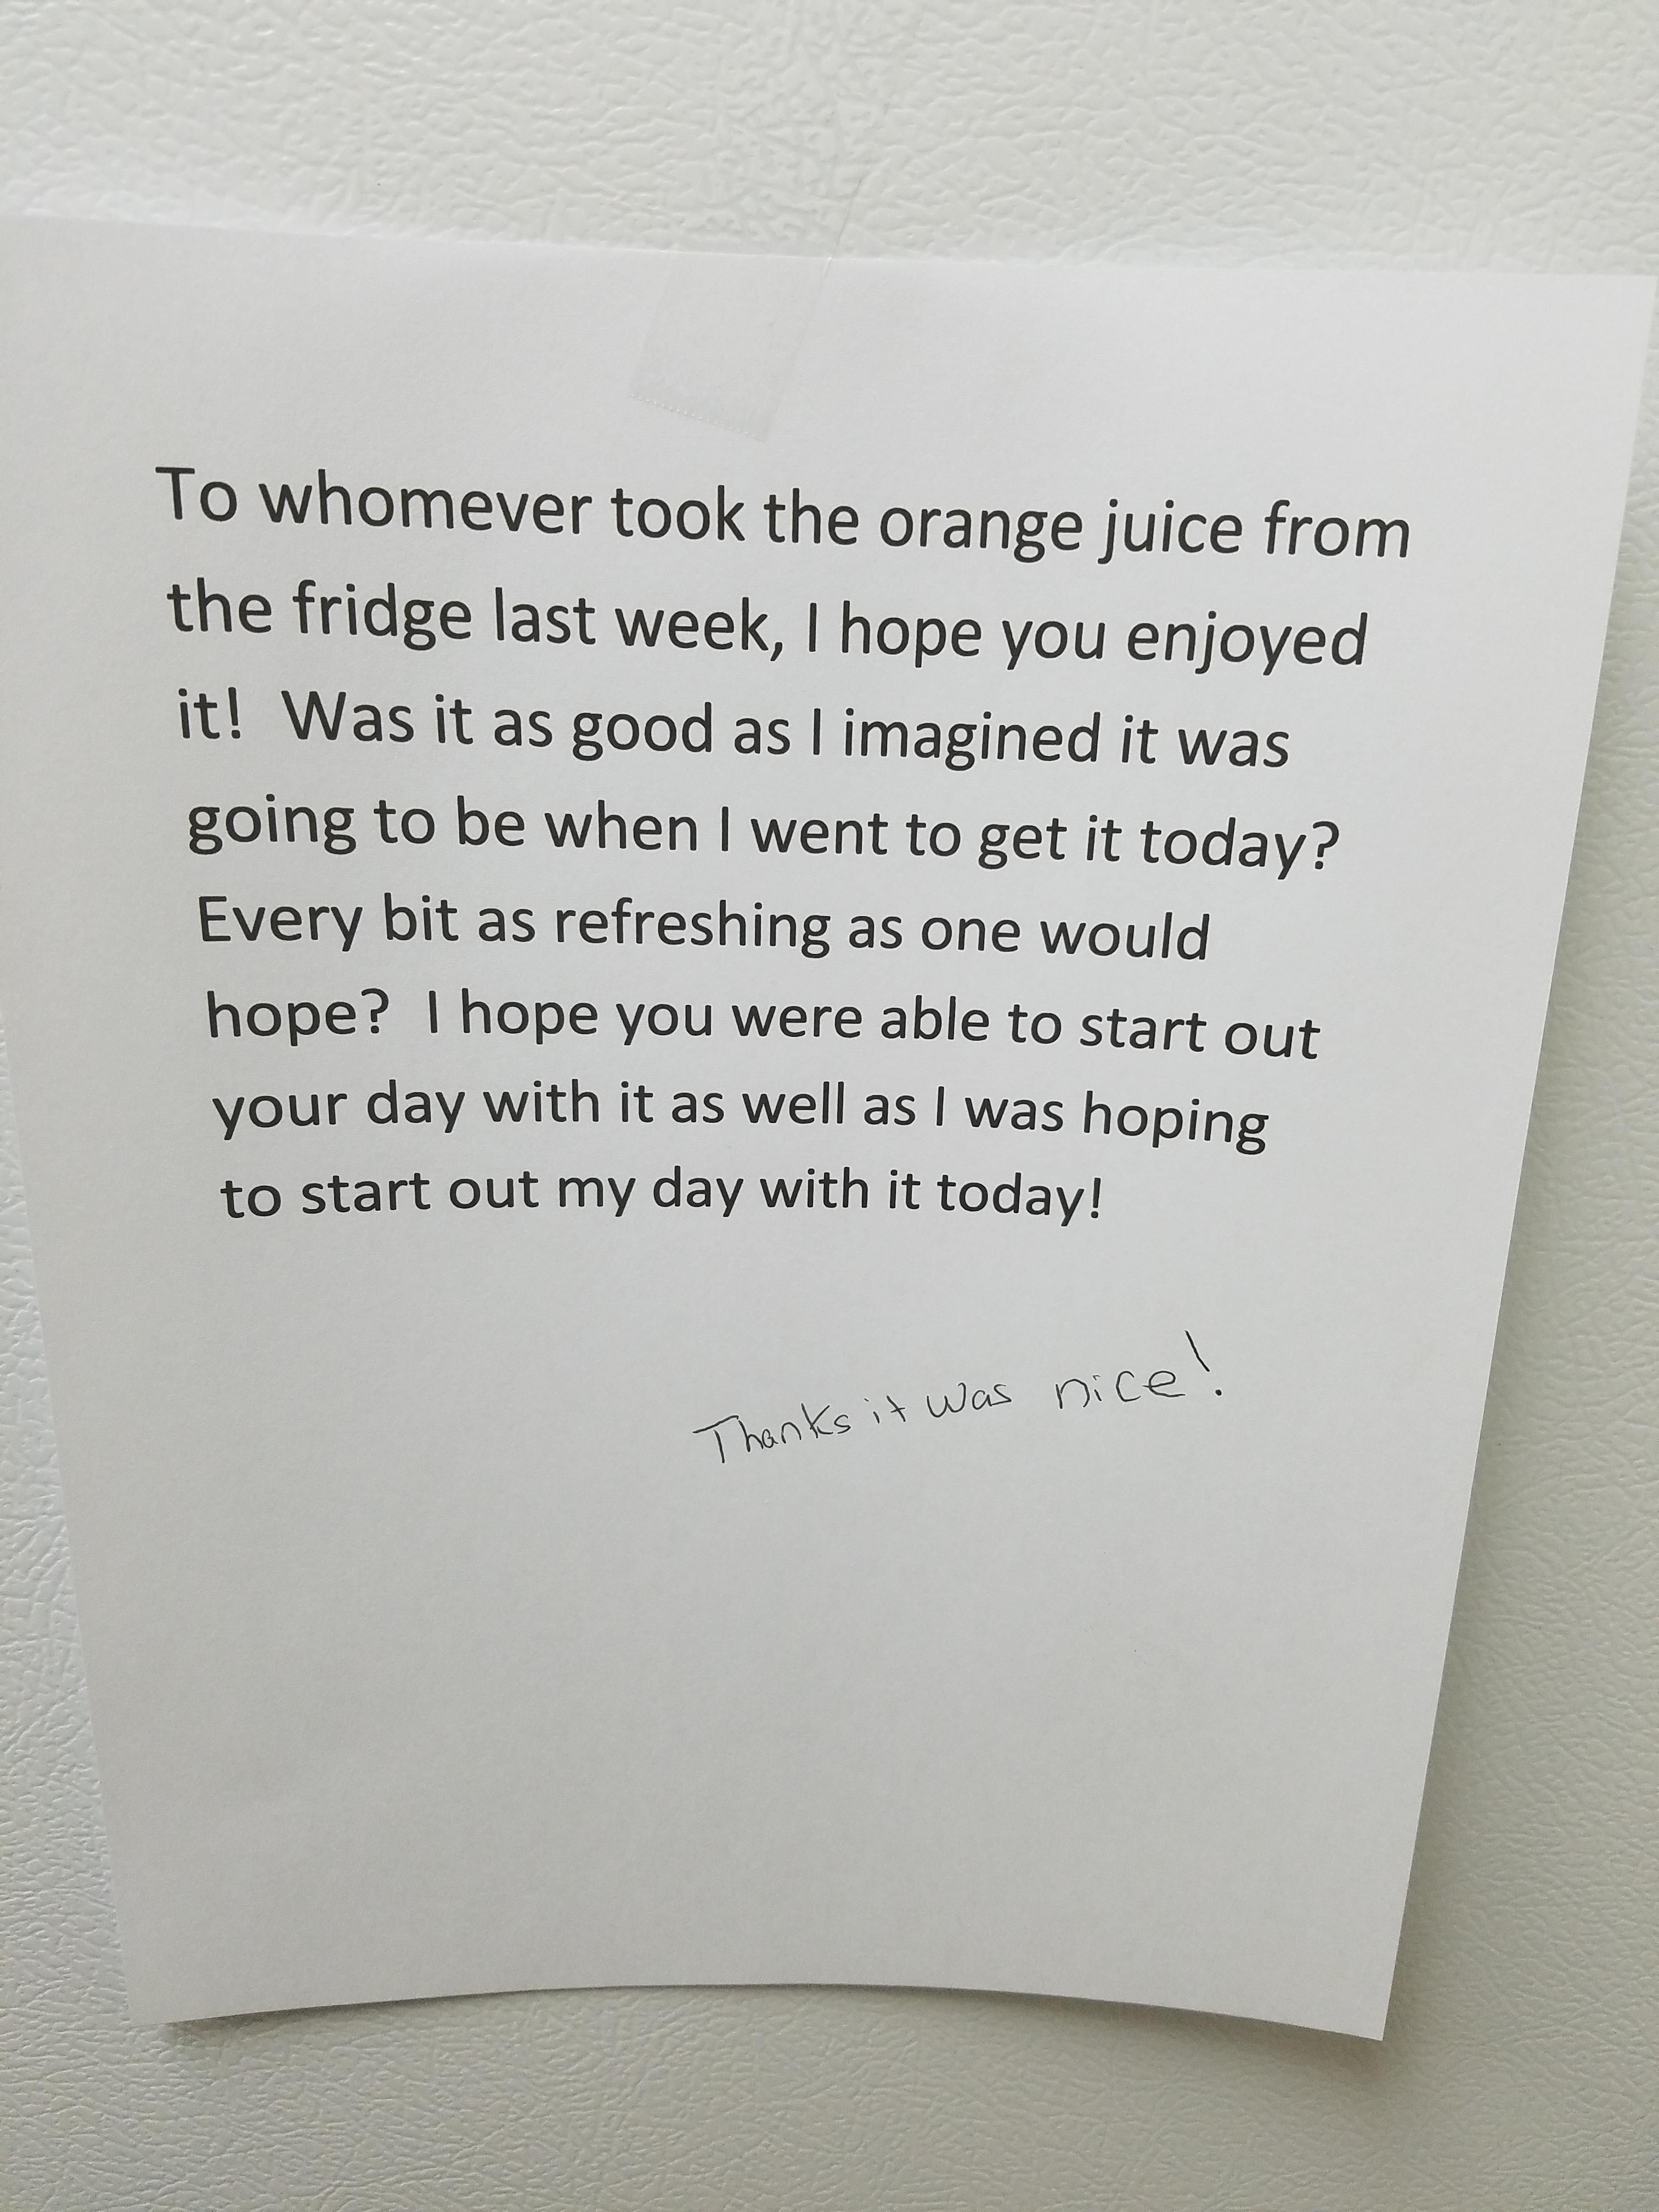 Passive aggressive work fridge theft at its best.